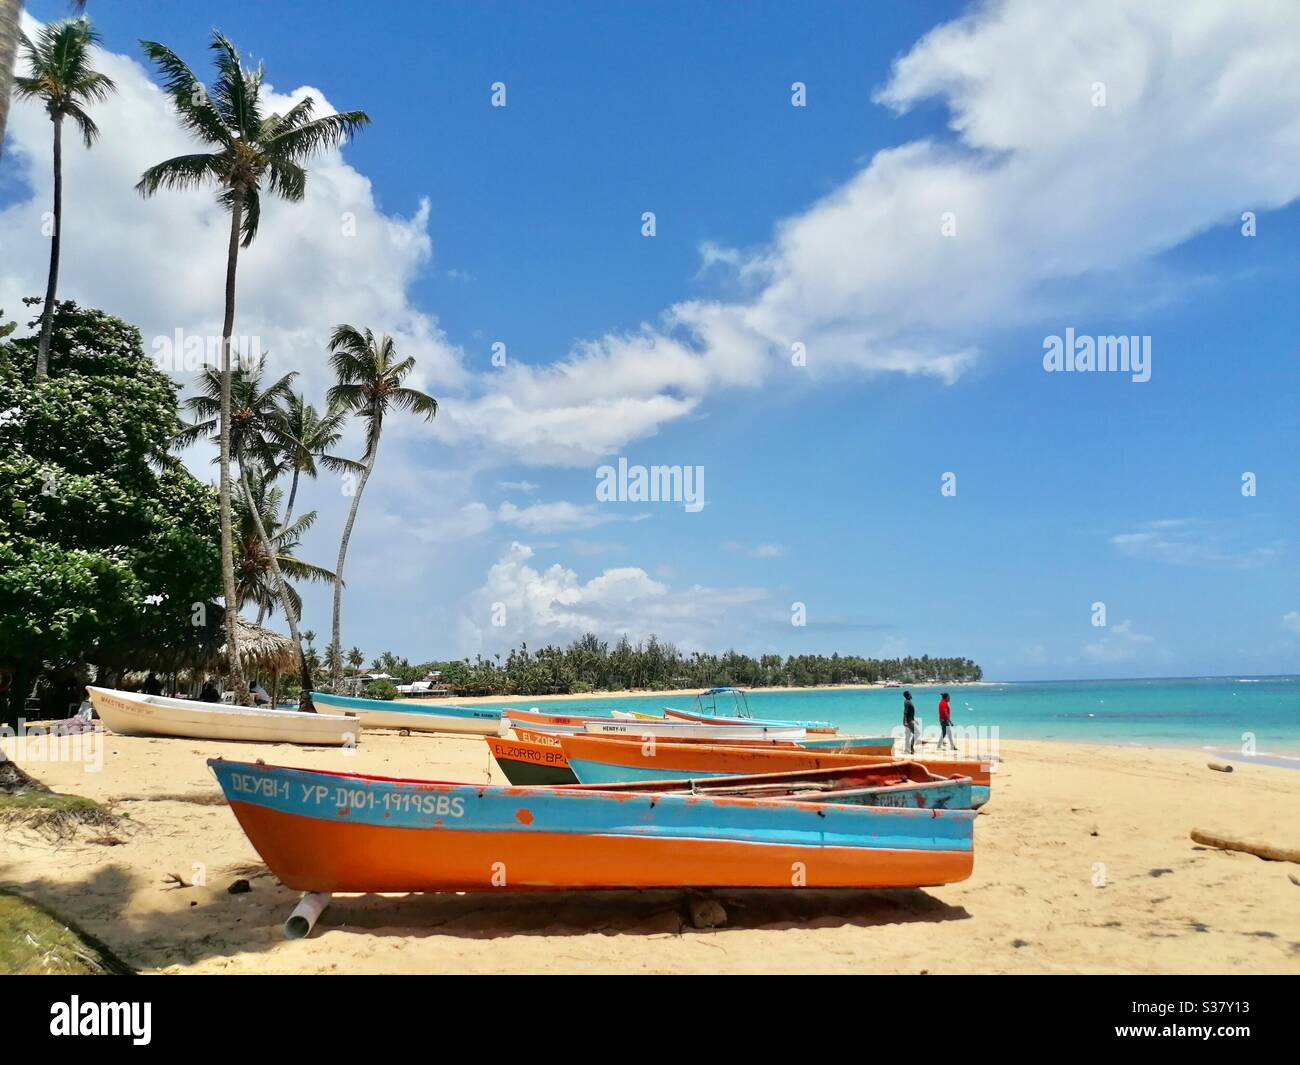 The beautiful beach at las terranas in the Dominican Republic. Stock Photo